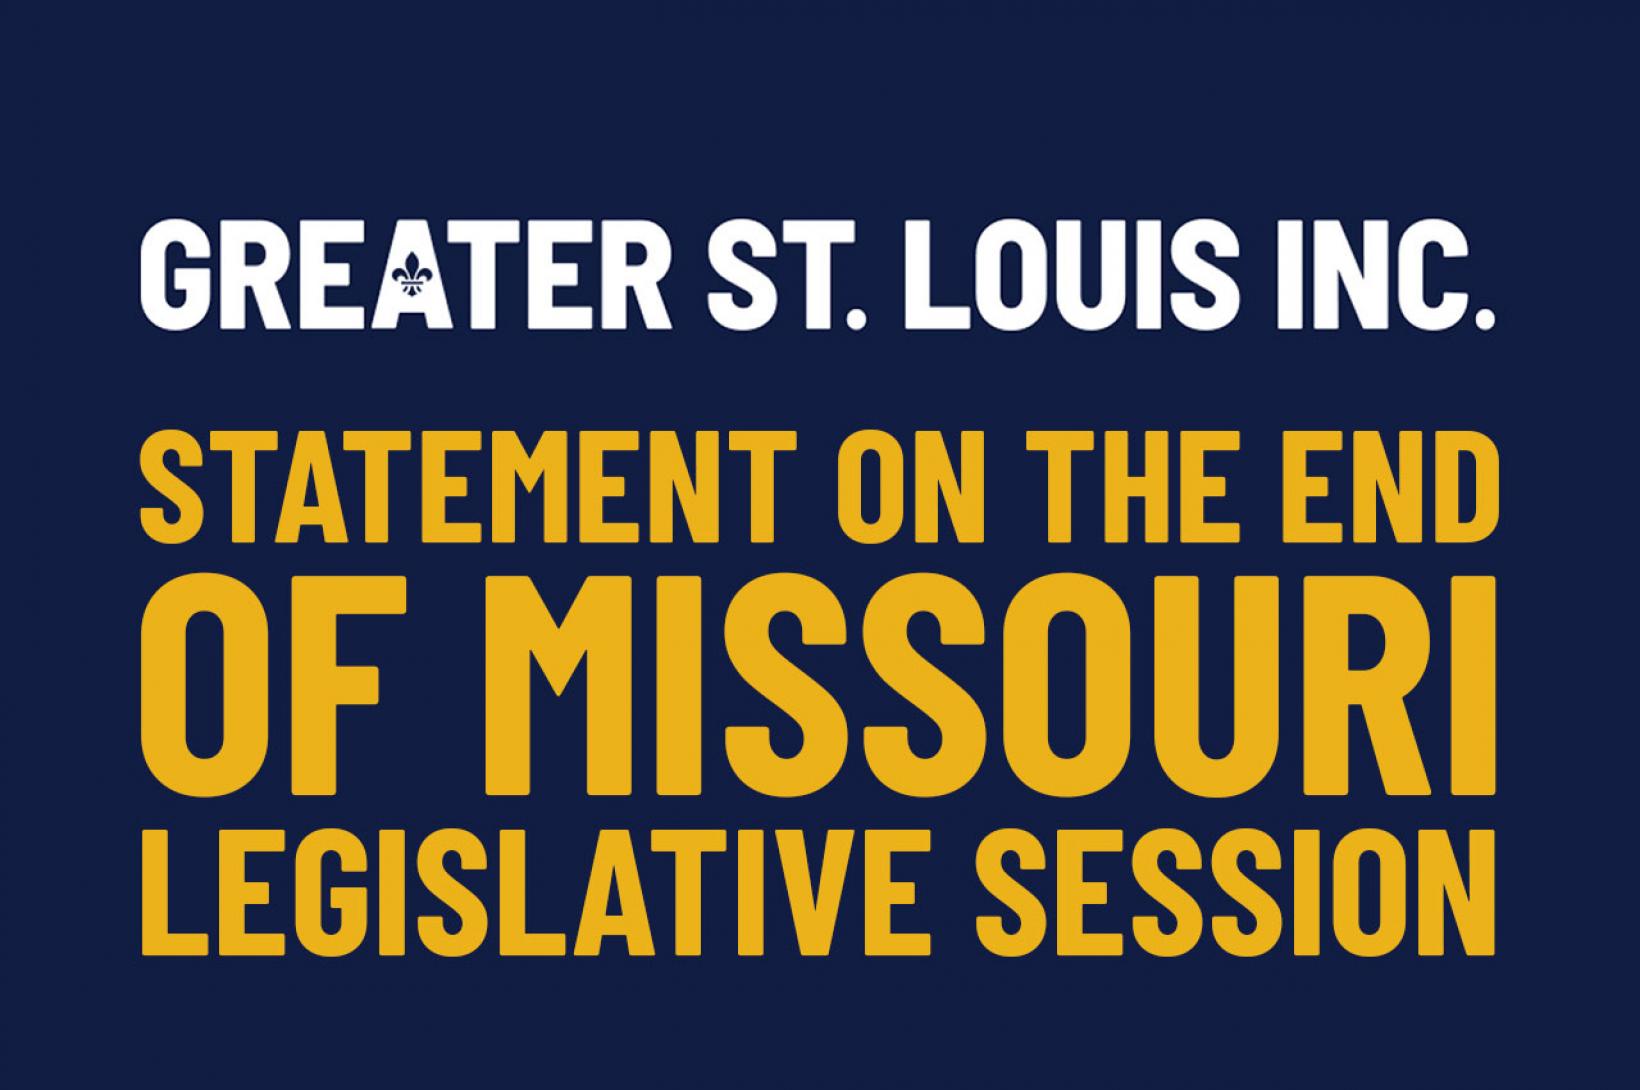 GSL Inc. Statement on the End of Missouri Legislative Session